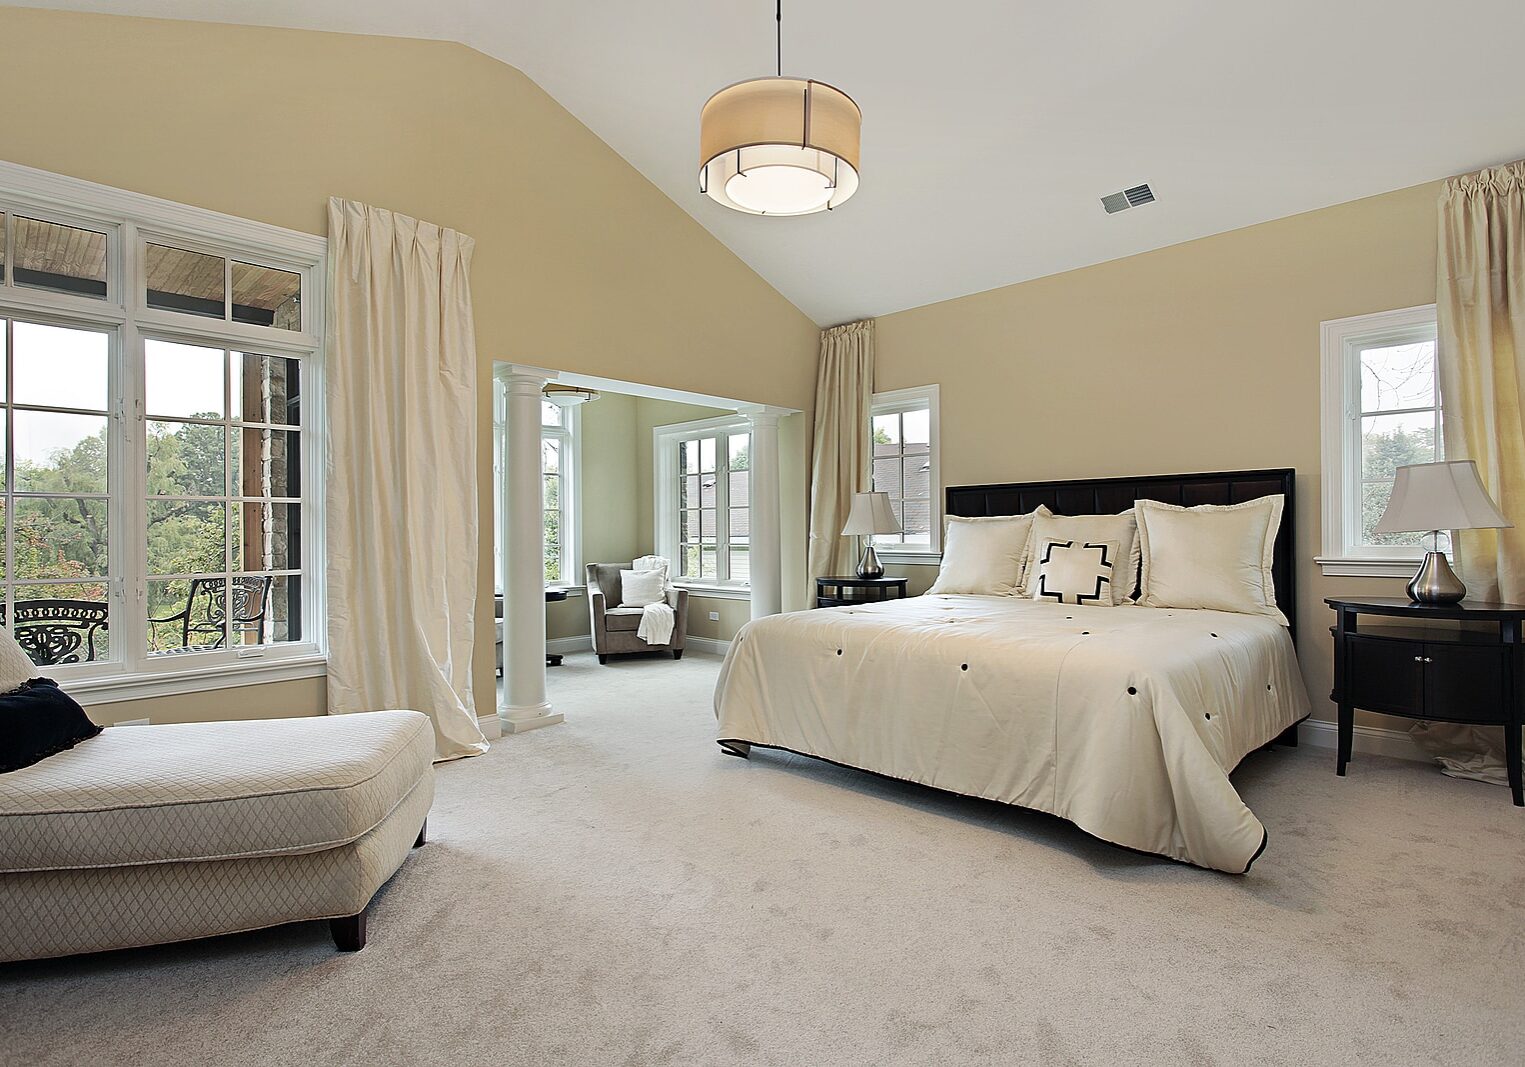 Master bedroom in luxury condominium with sitting room